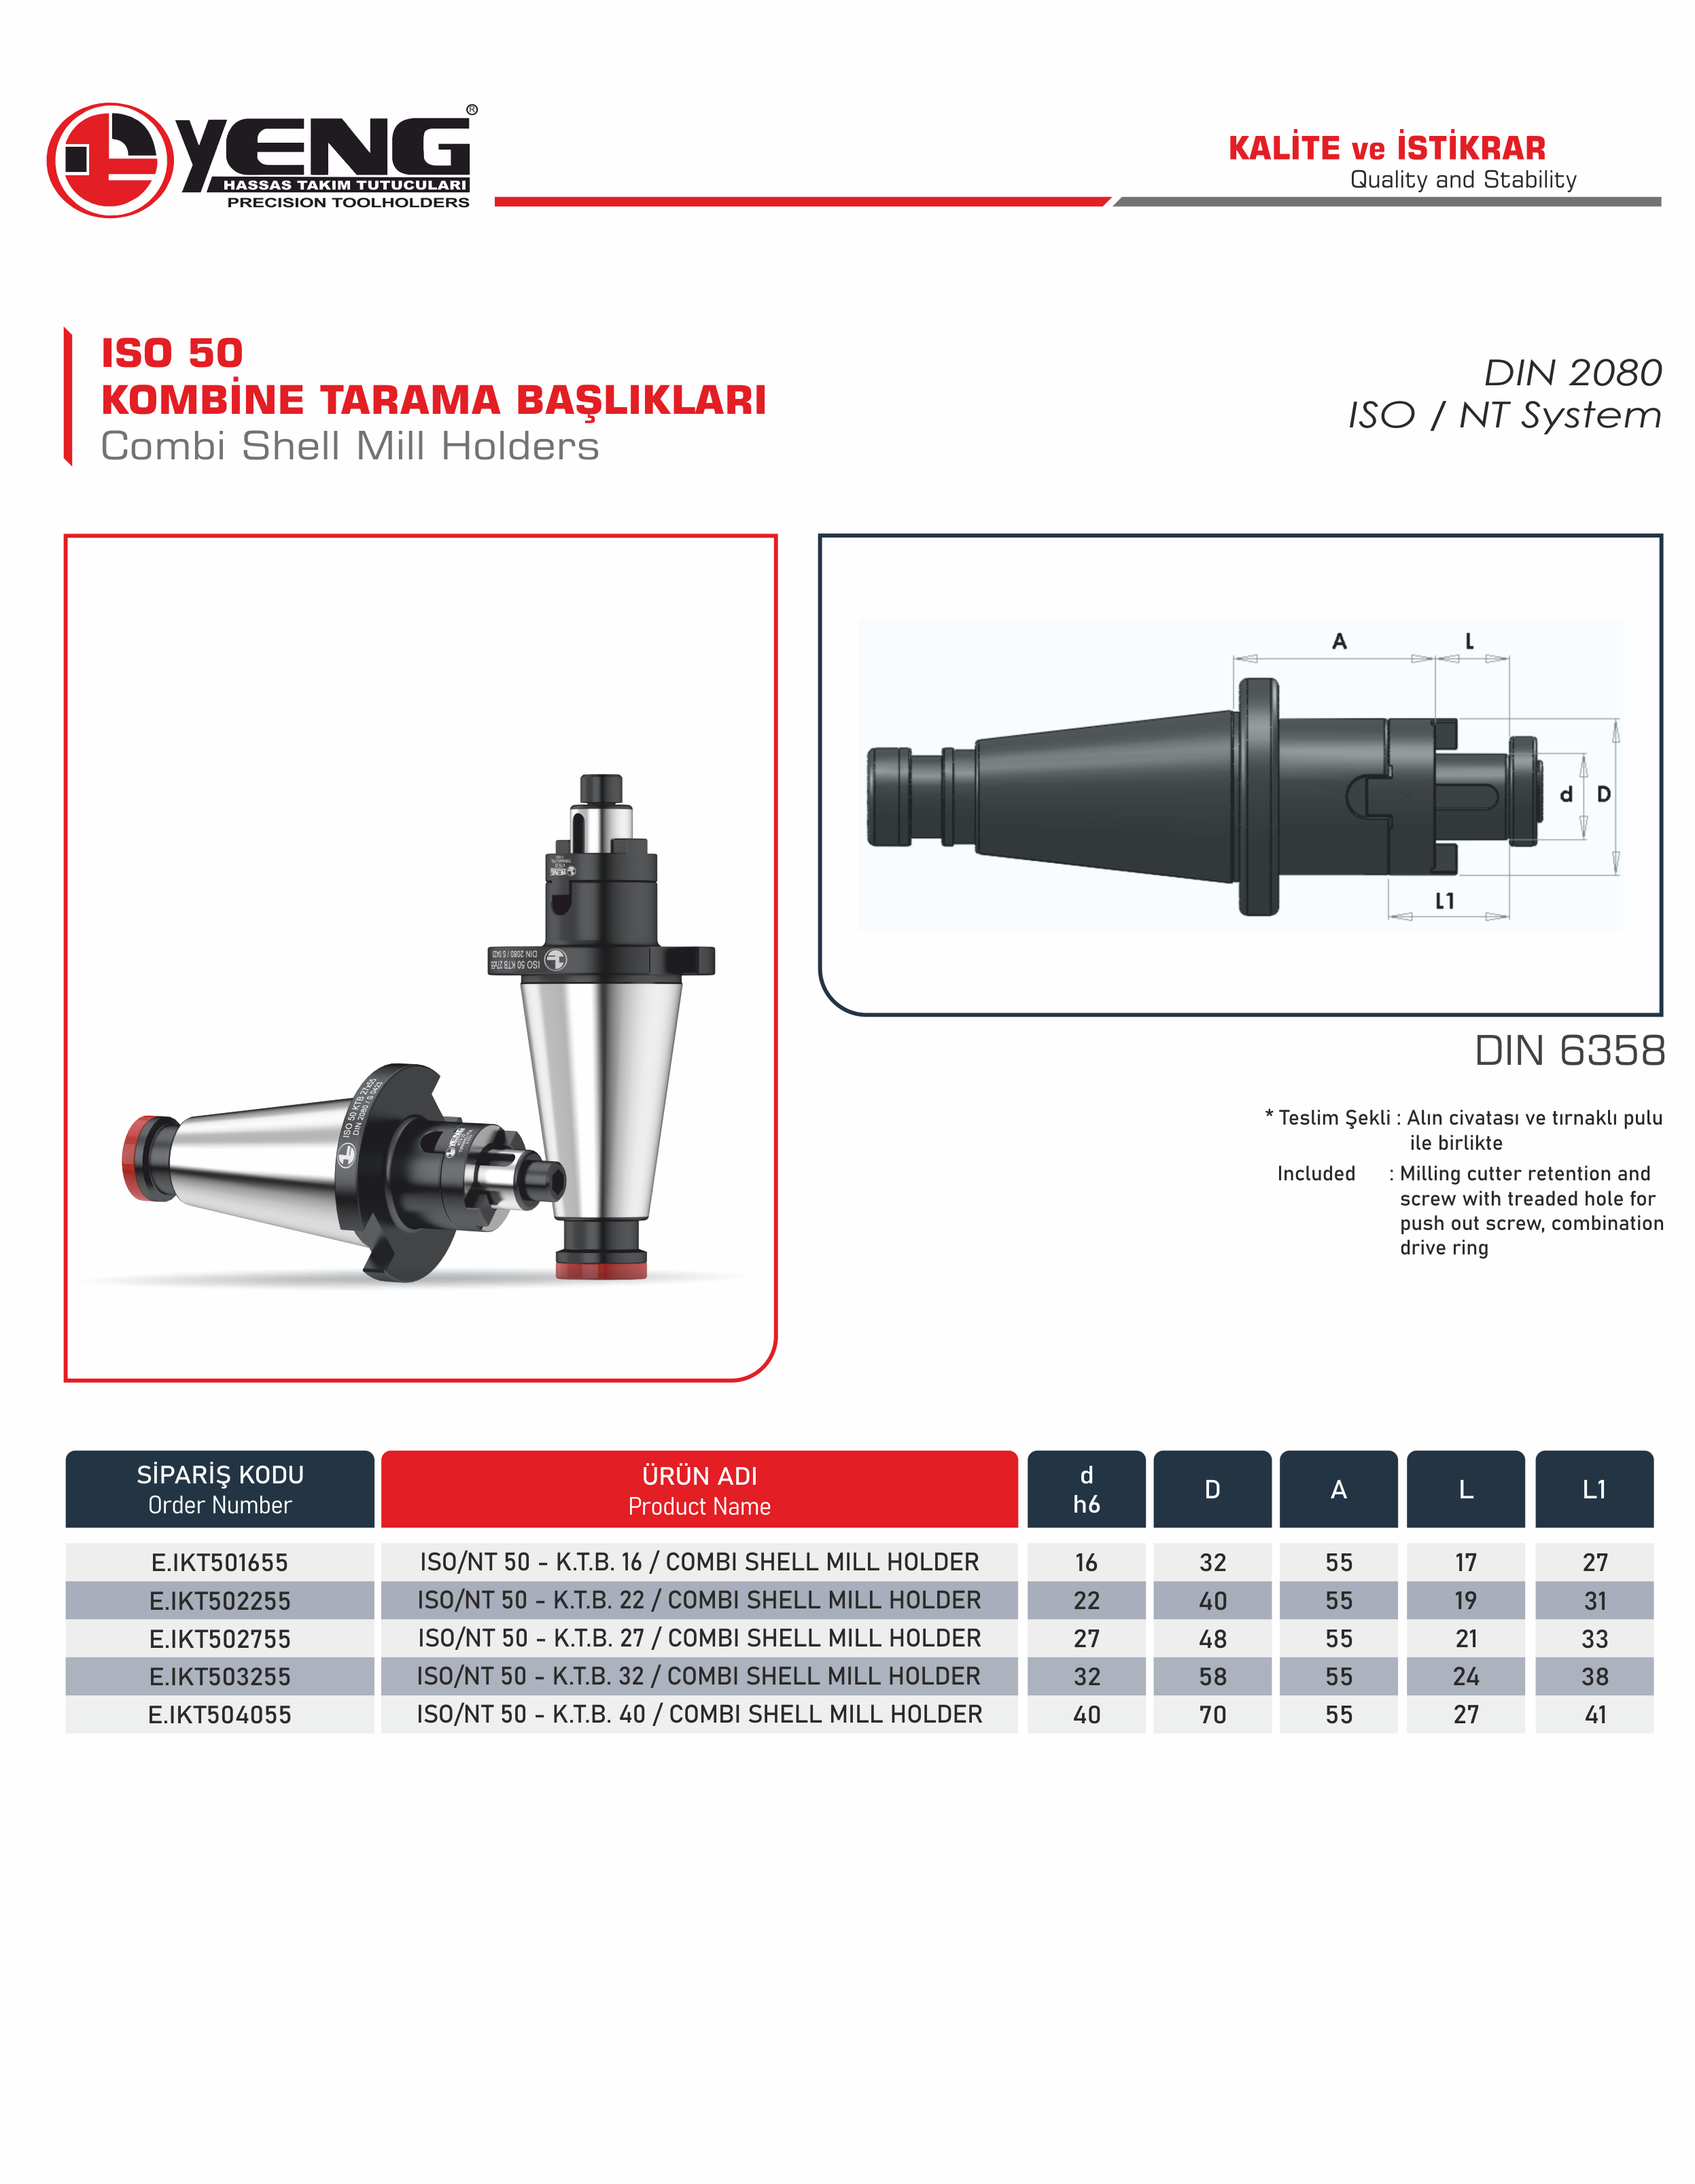 ISO 50 Combi Shell Mill Holder / DIN 6358